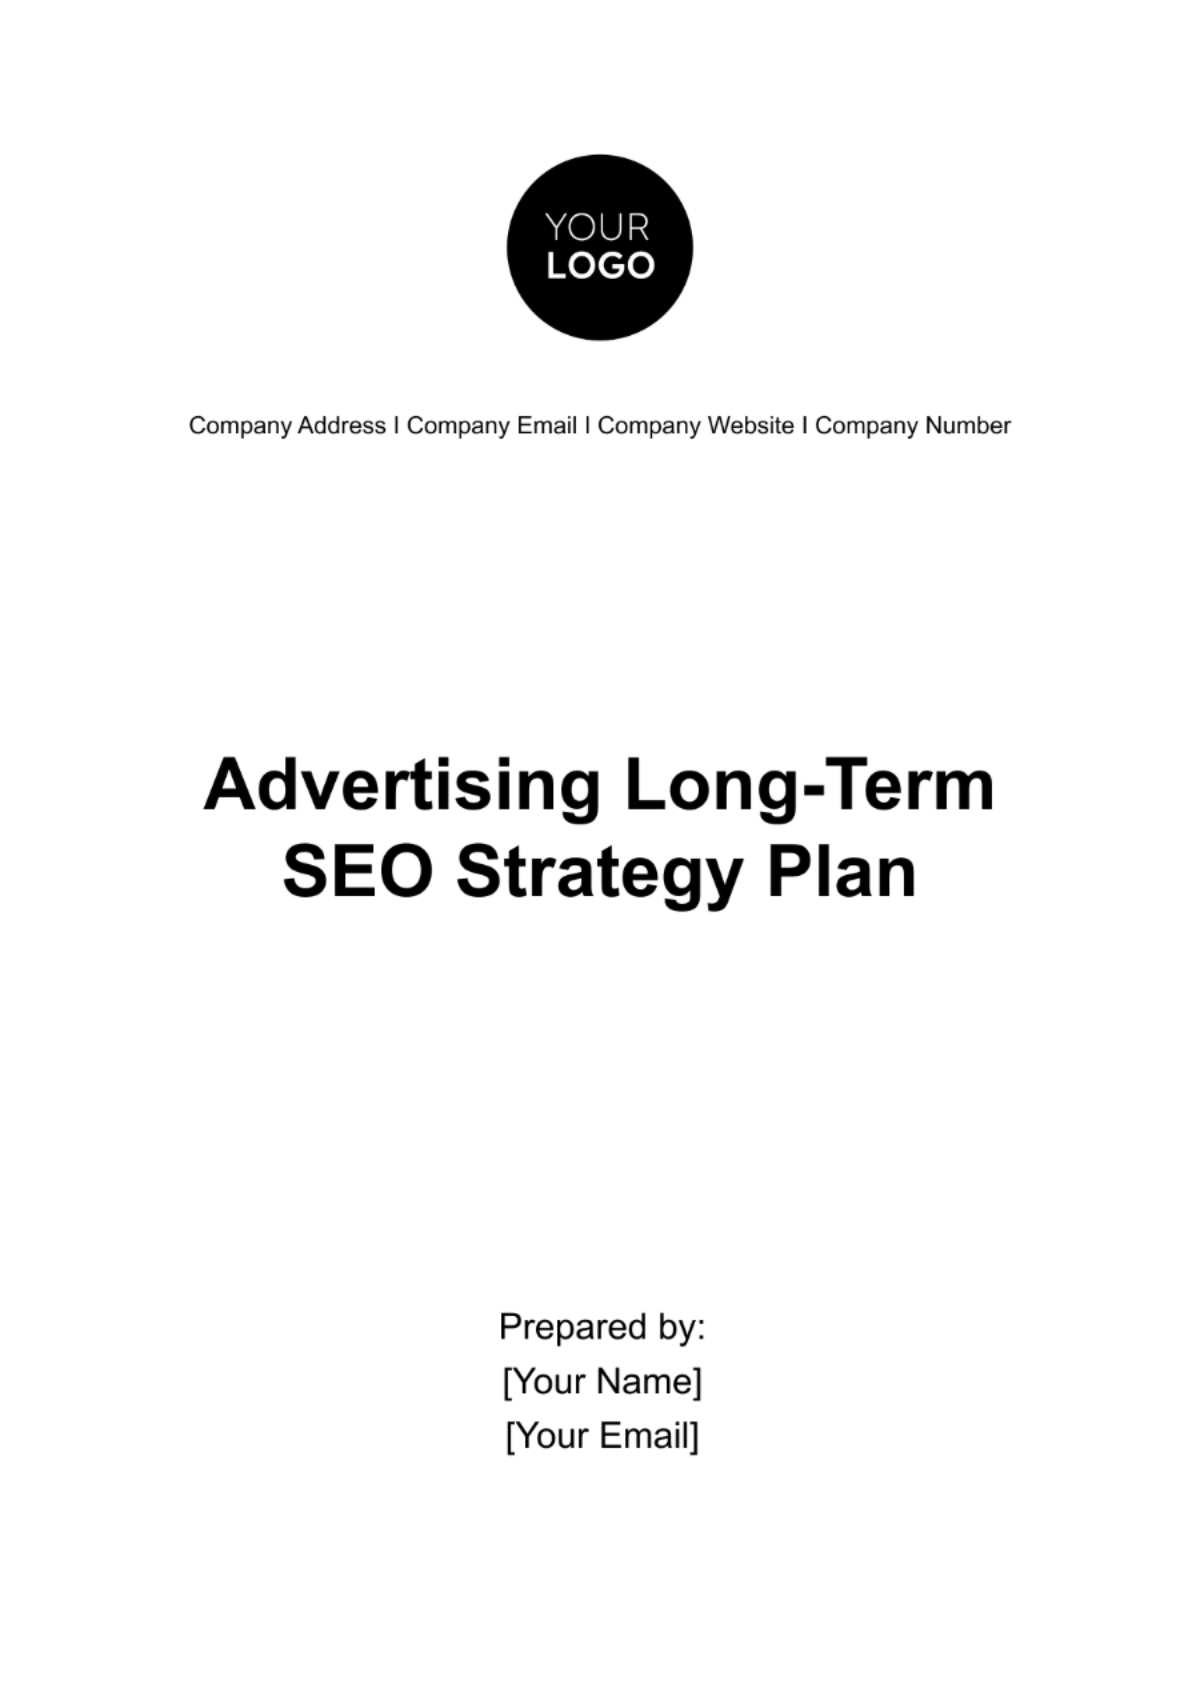 Advertising Long-Term SEO Strategy Plan Template